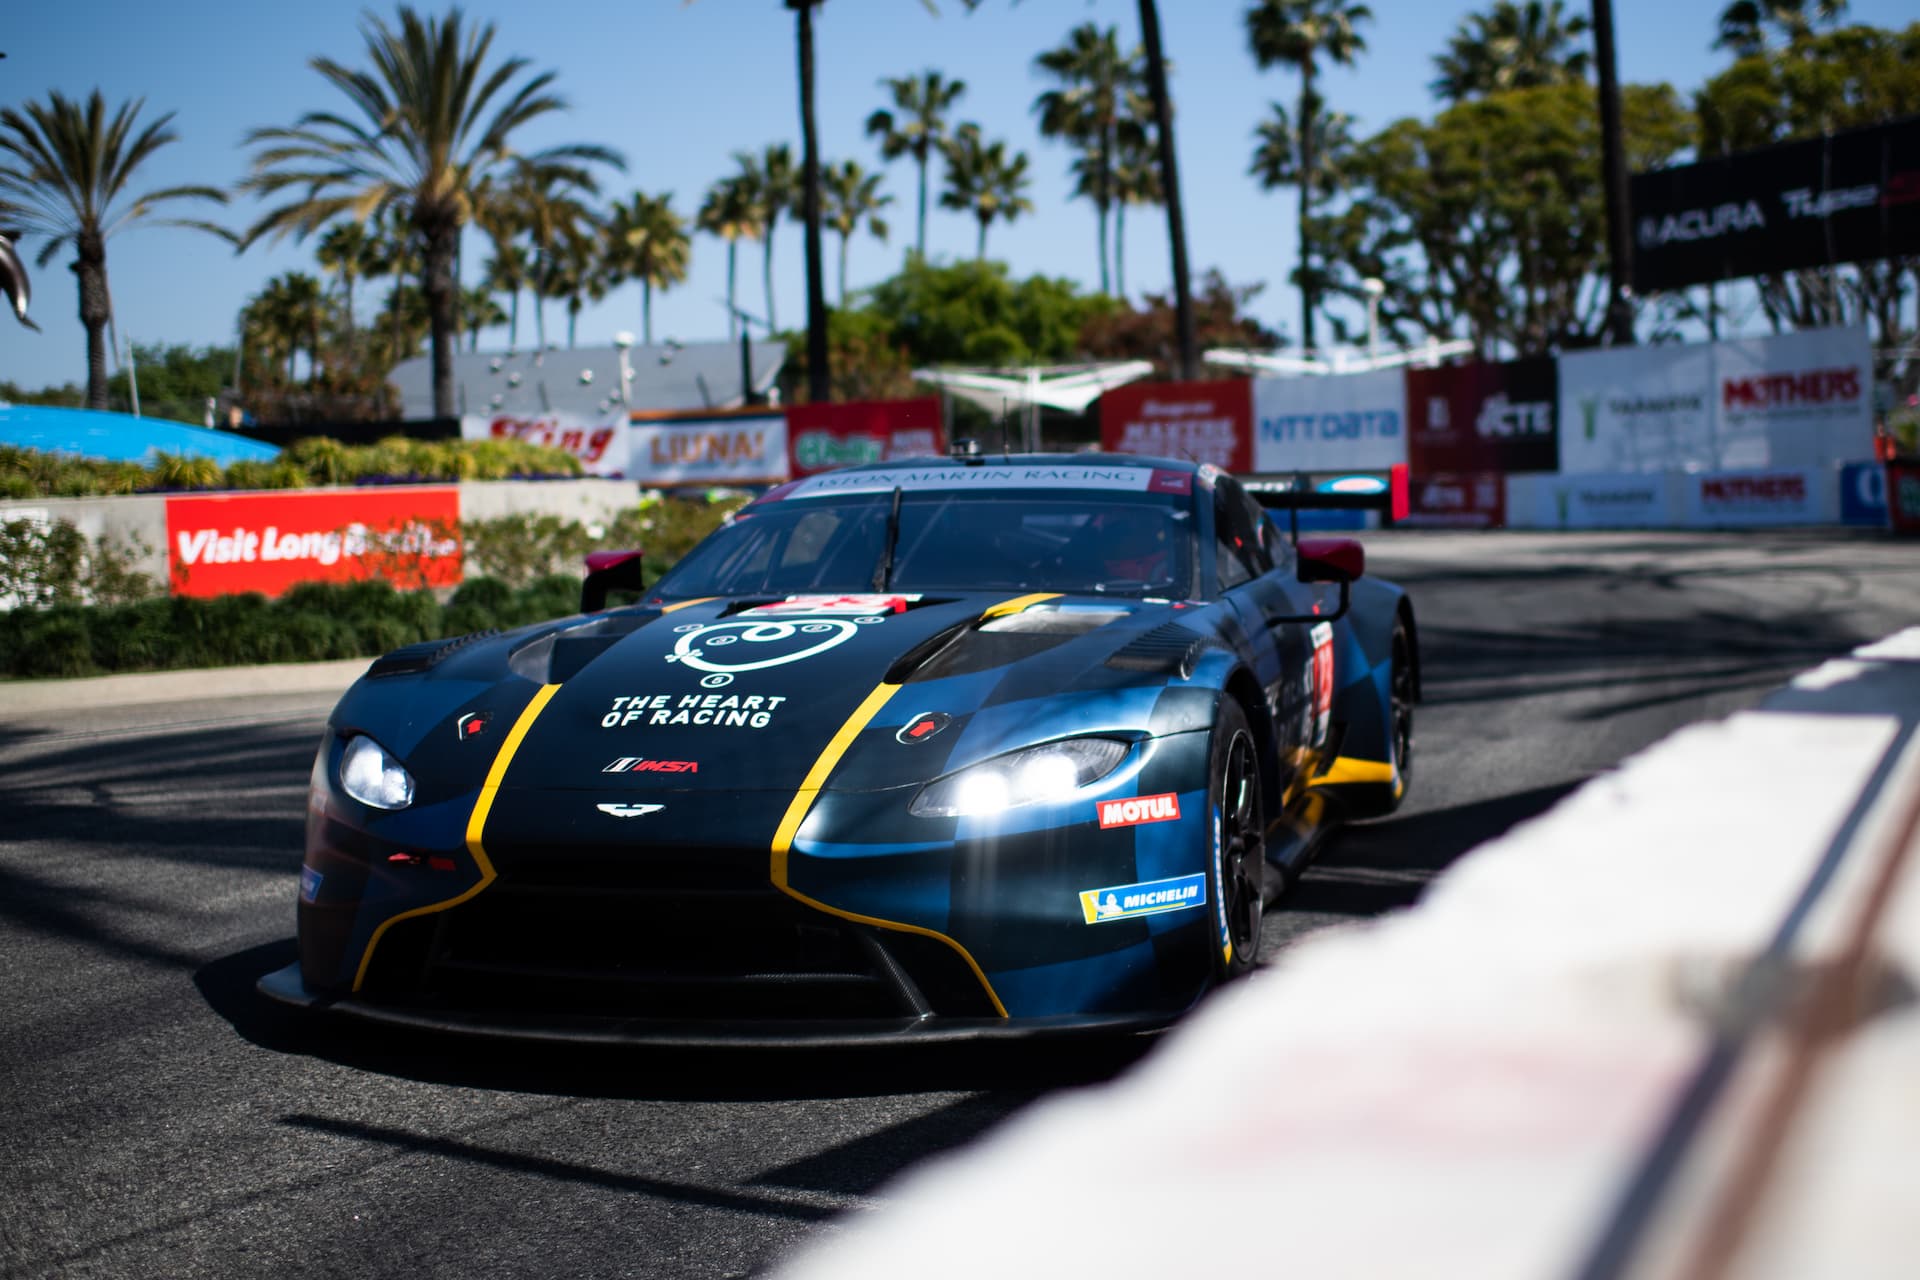 Aston Martin at Grand Prix of Long Beach